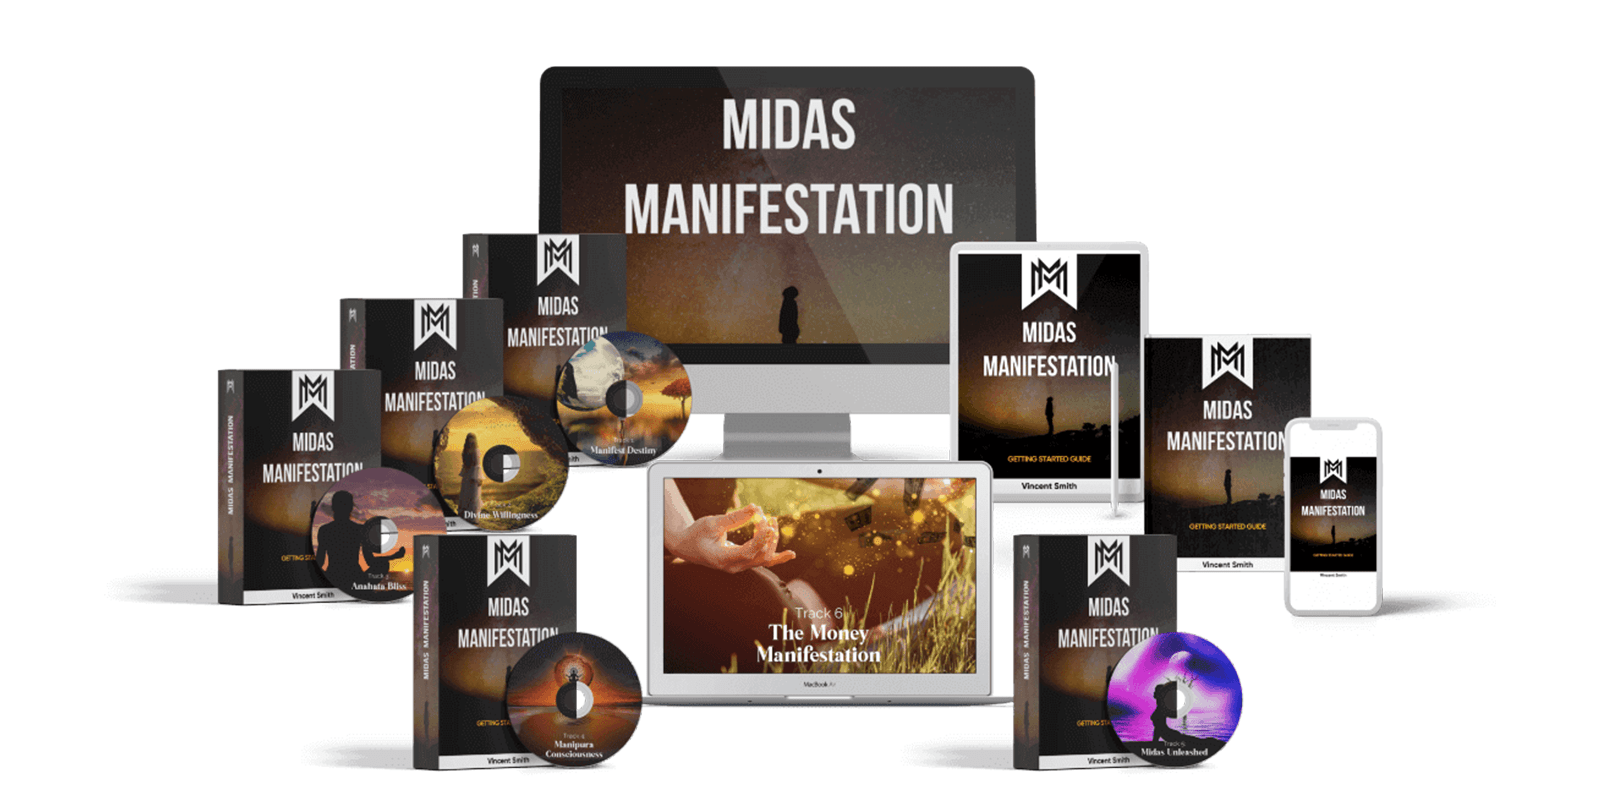 Midas-manifestation-reviews